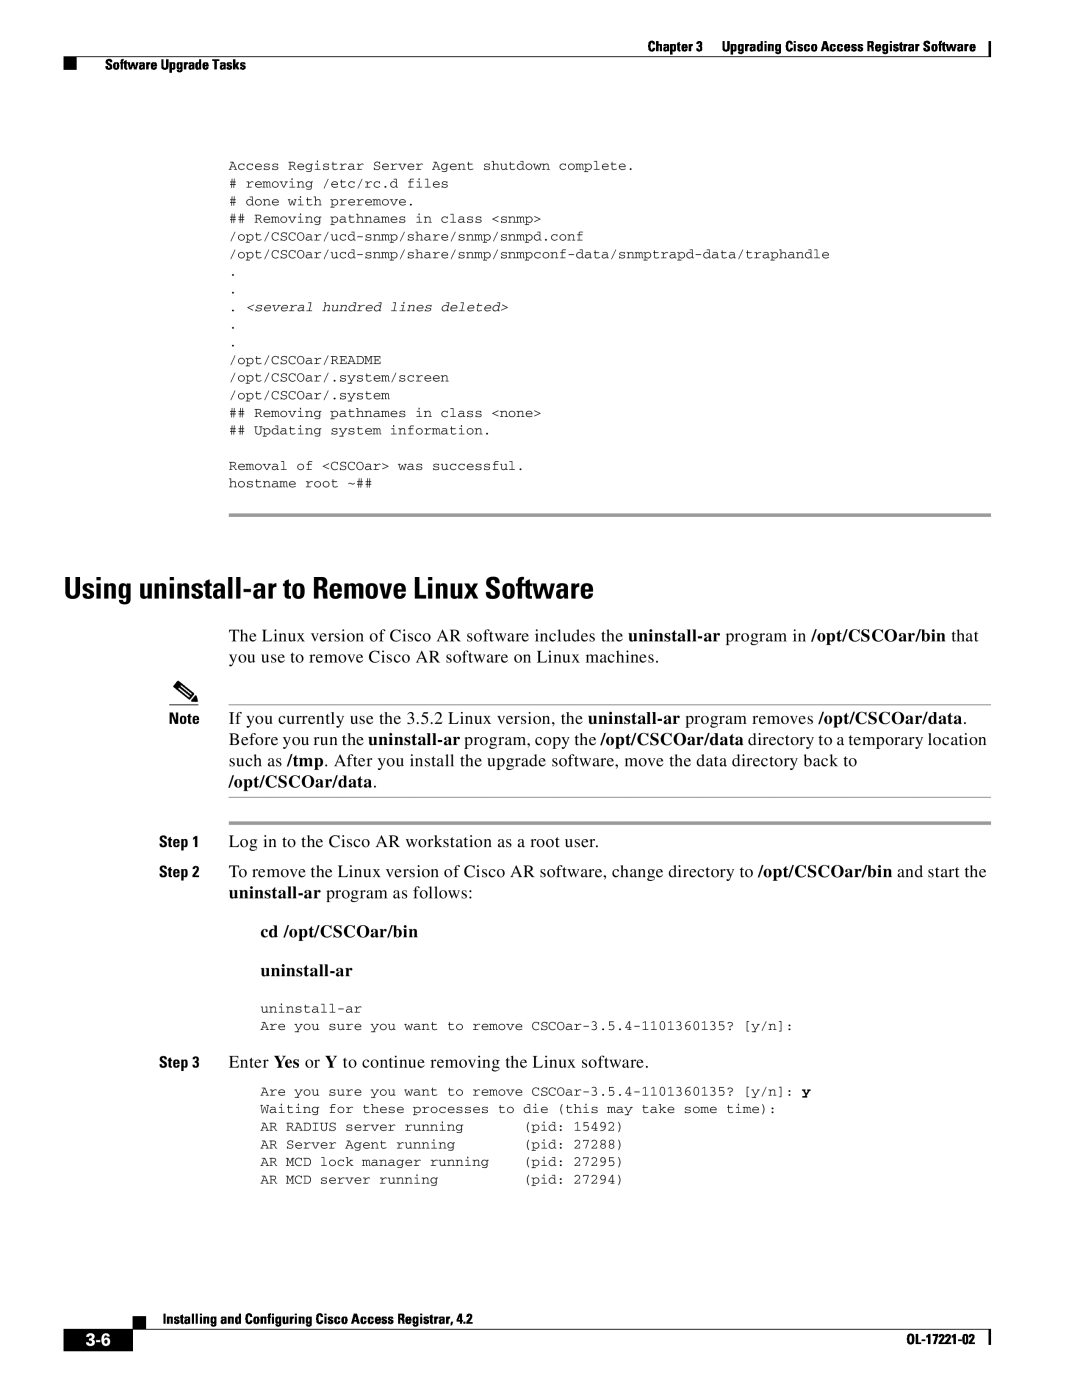 Cisco Systems 4.2 manual Using uninstall-ar to Remove Linux Software, cd /opt/CSCOar/bin uninstall-ar 